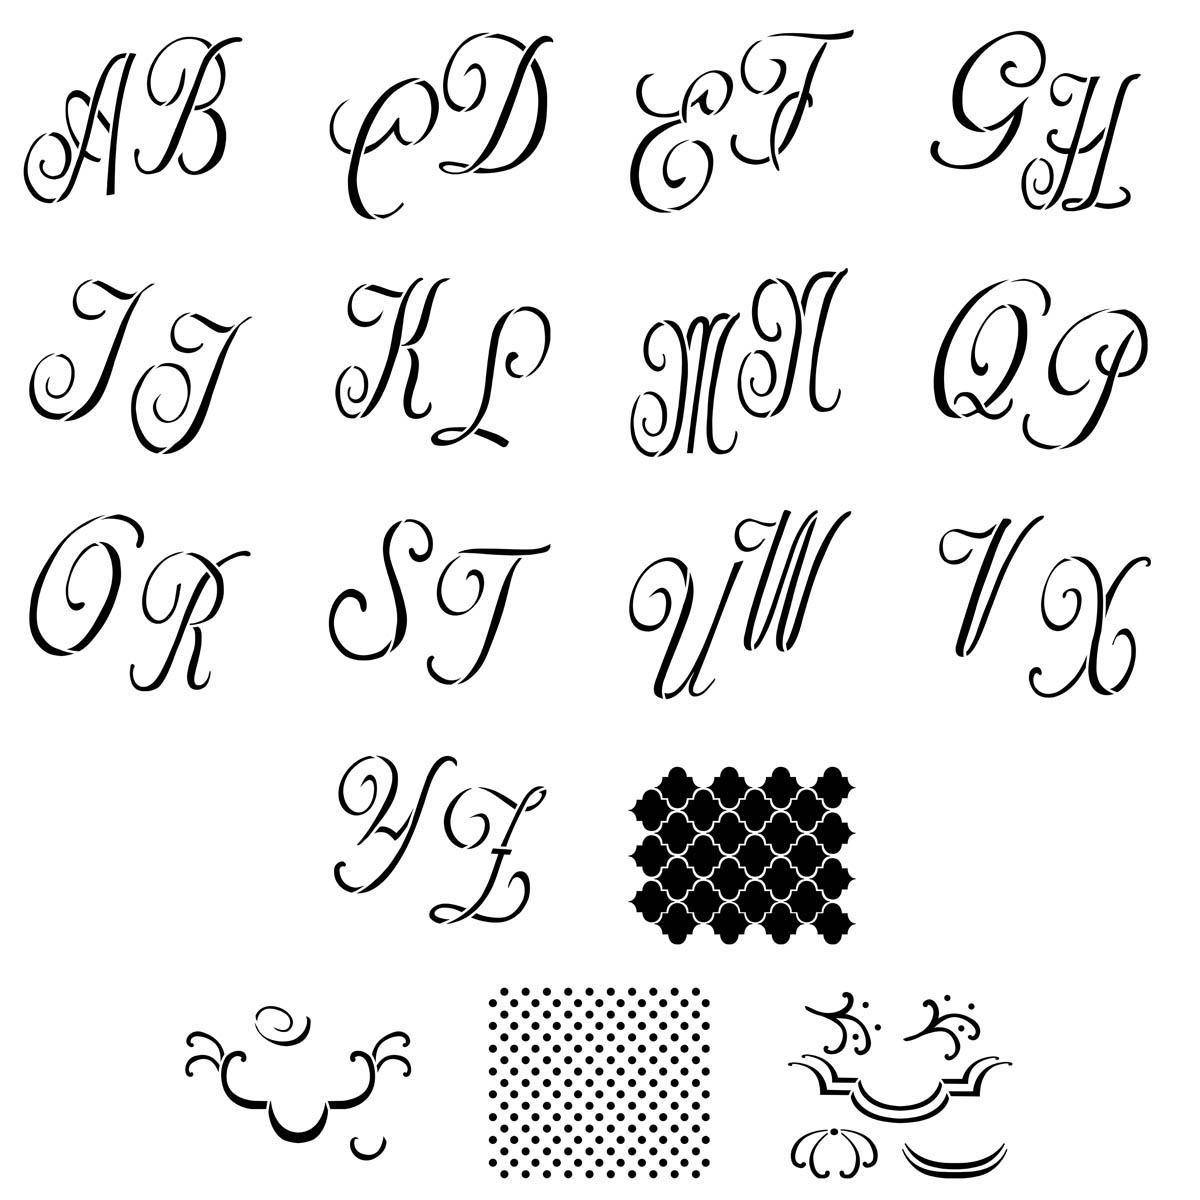 FolkArt ® Alphabet & Monogram Paper Stencils - Script Font, 5